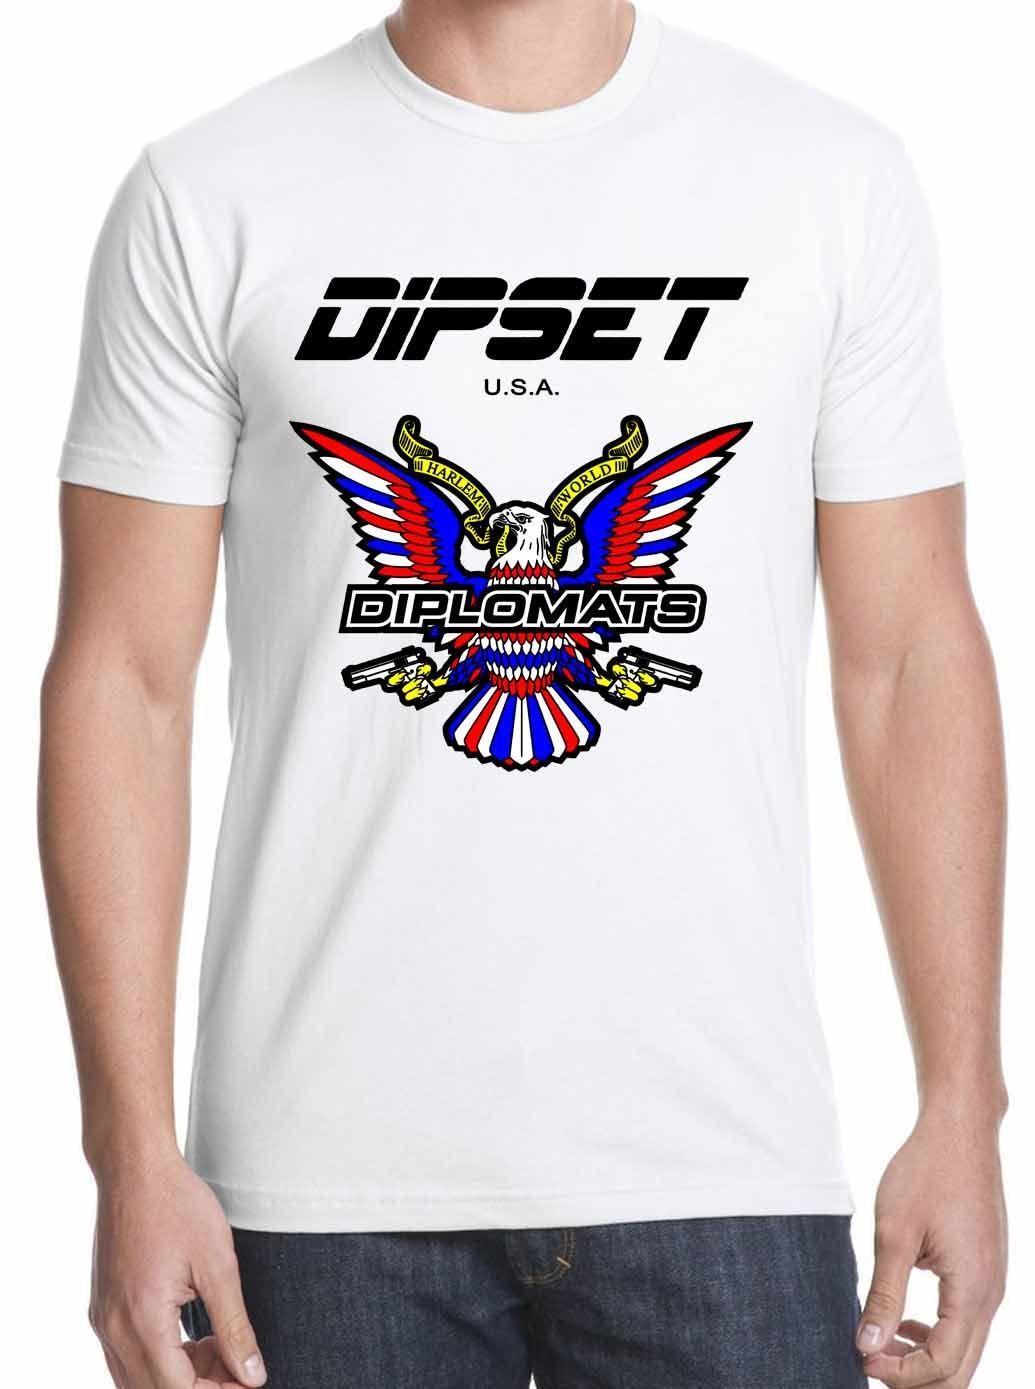 Dipset Logo - NEW The Diplomats Logo Dipset T Shirt SIZE S Free Shipping Mens 2018 Fashion